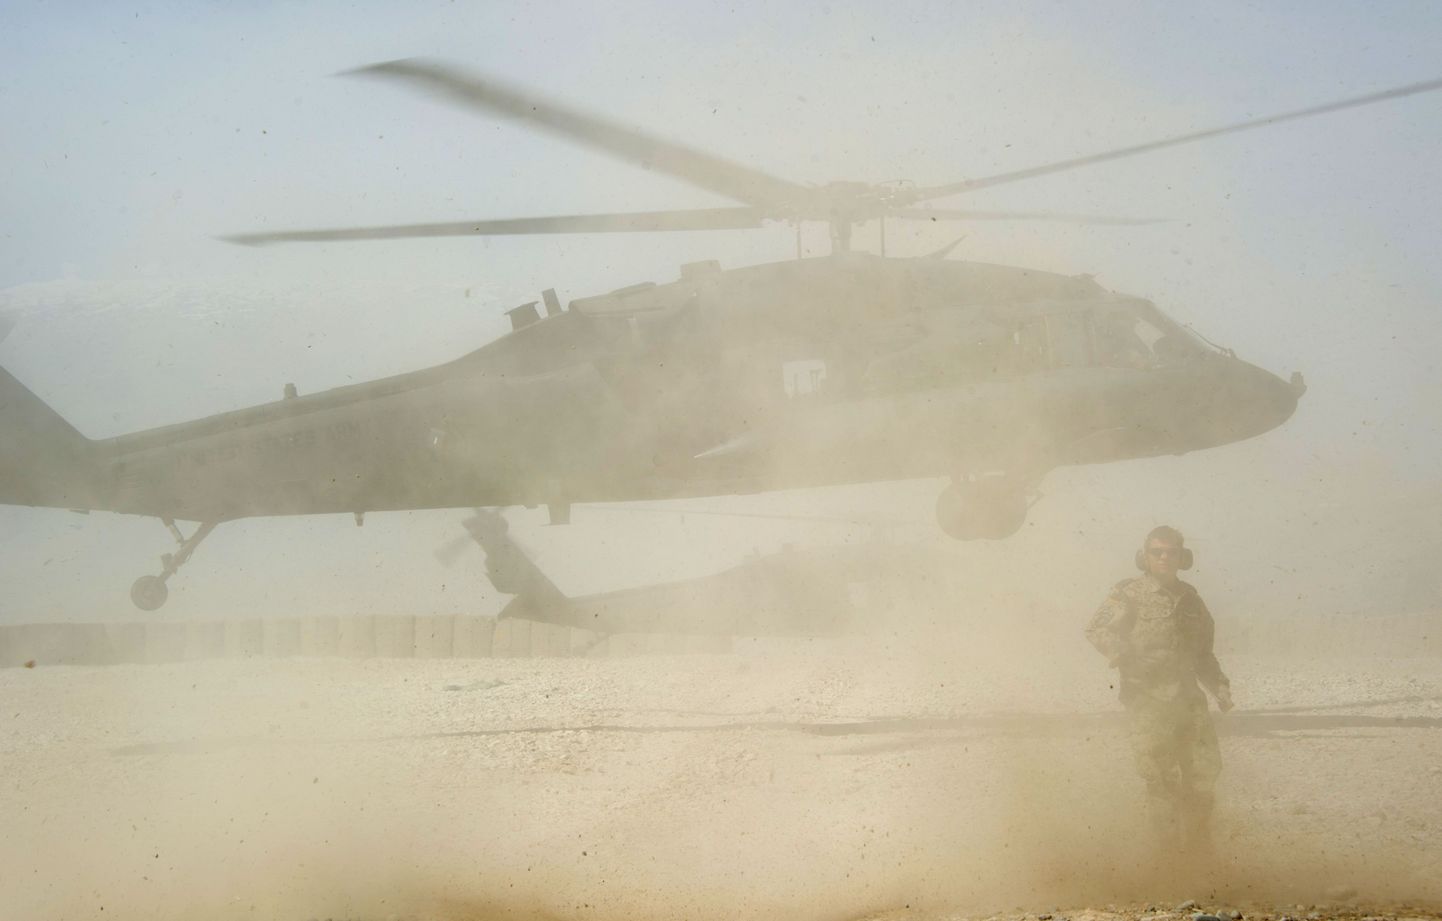 Black Hawk в Афганистане. Иллюстративное фото